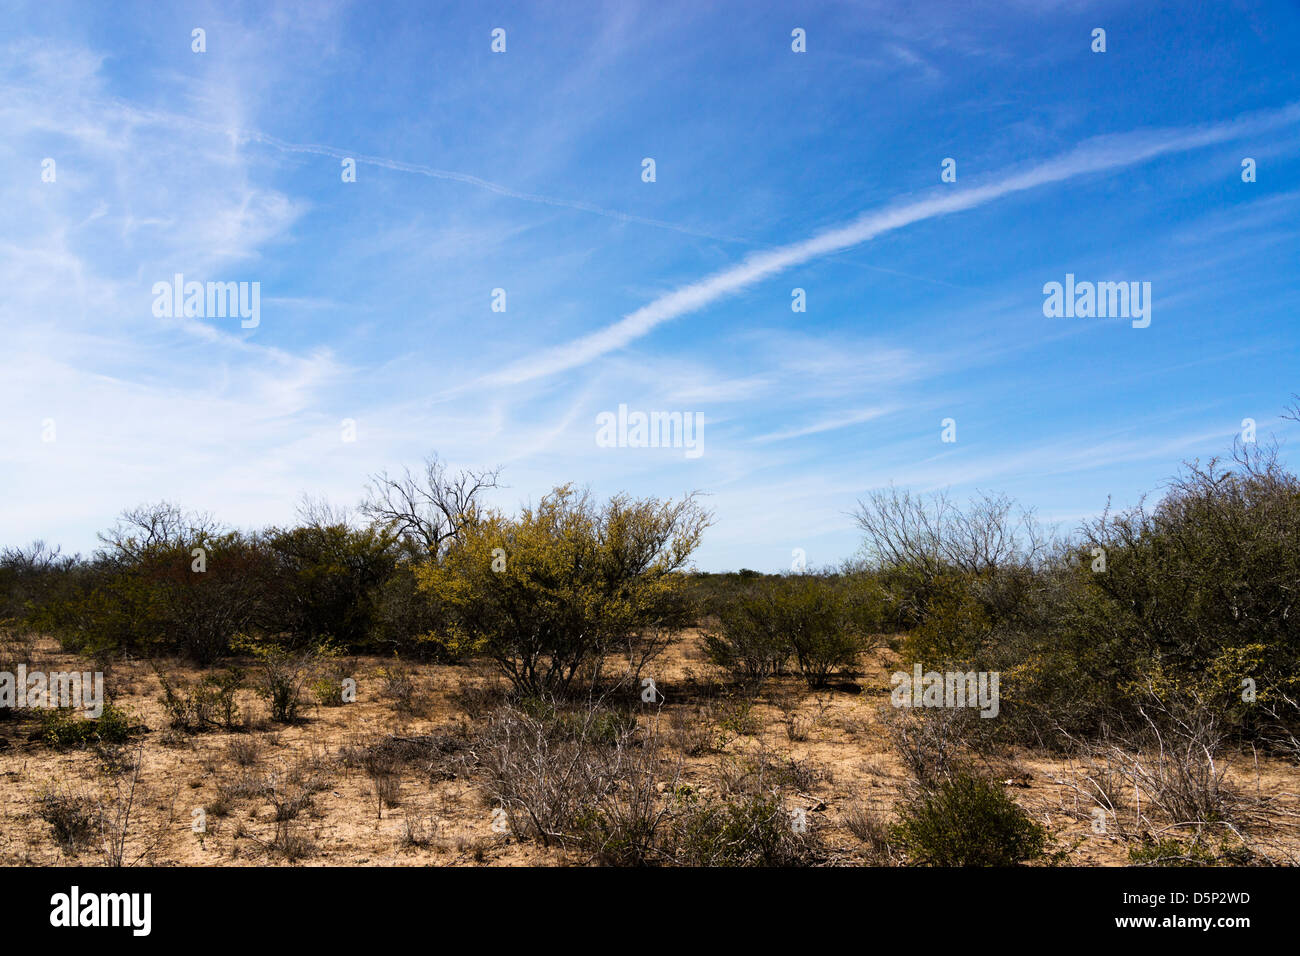 South Texas desert featuring acacia trees, mesquite, Black Thornbush and hard, dry caliche soil. Stock Photo